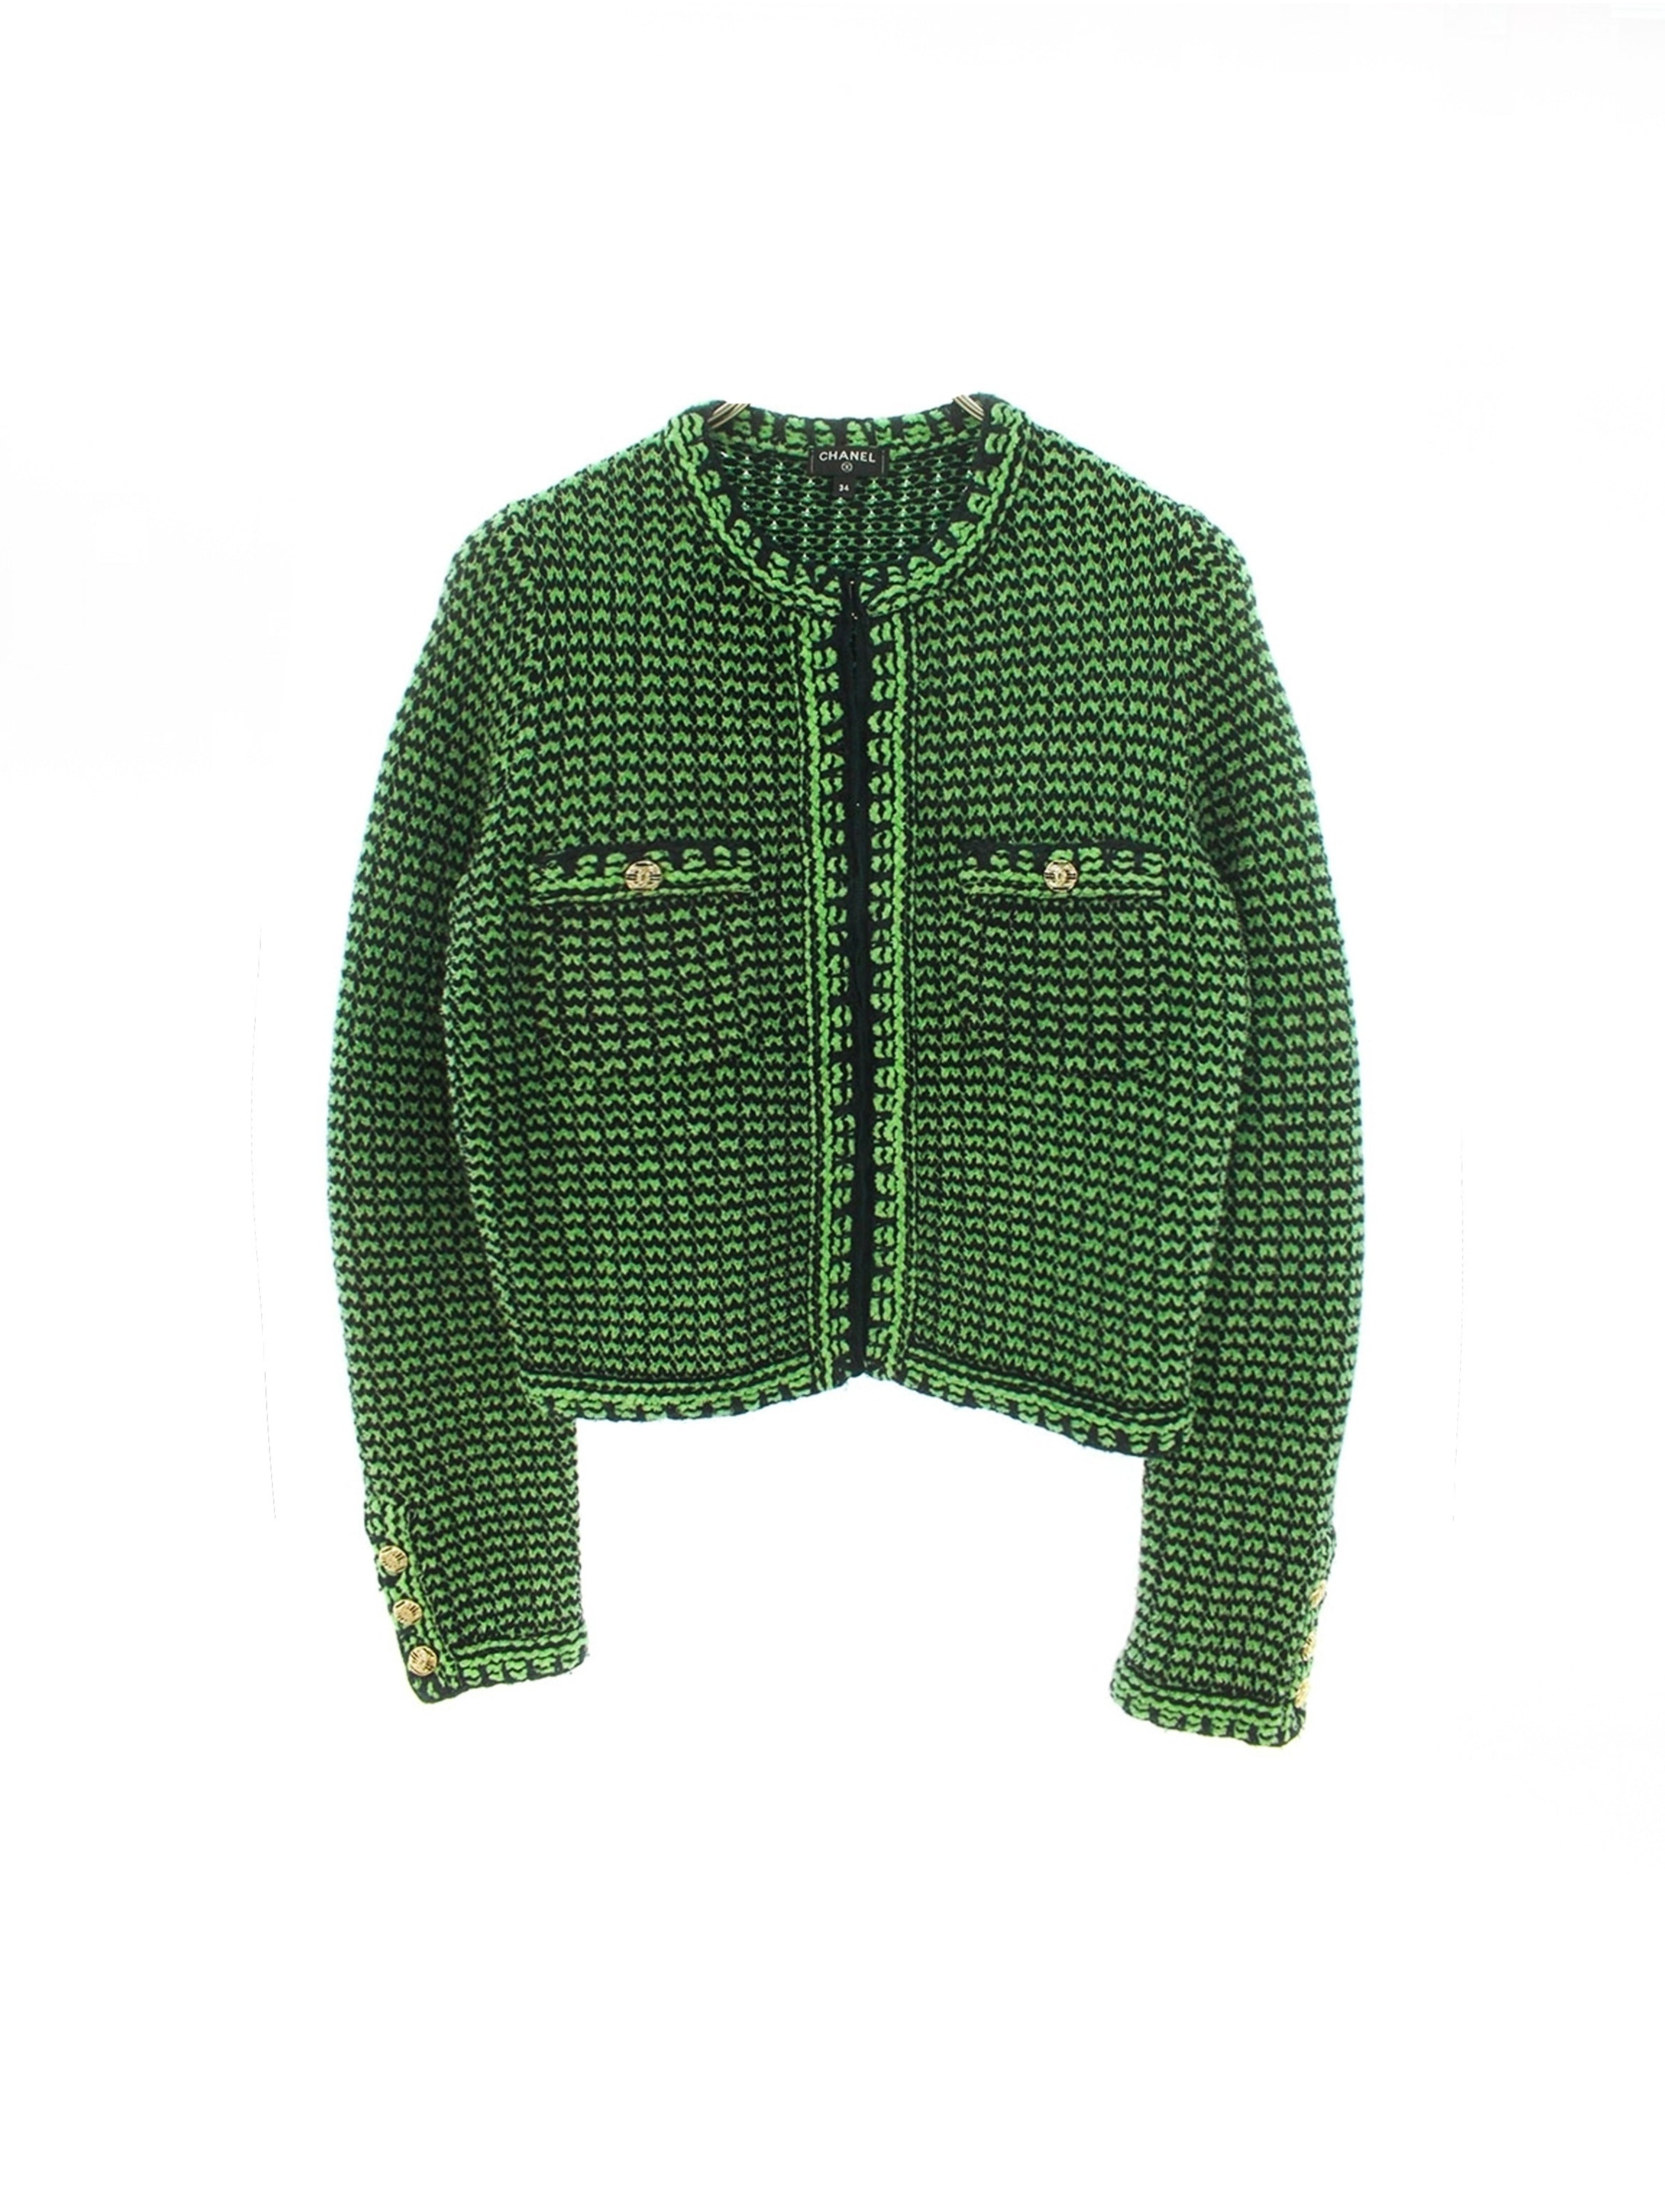 Chanel Green Tweed Jacket  hkvintage